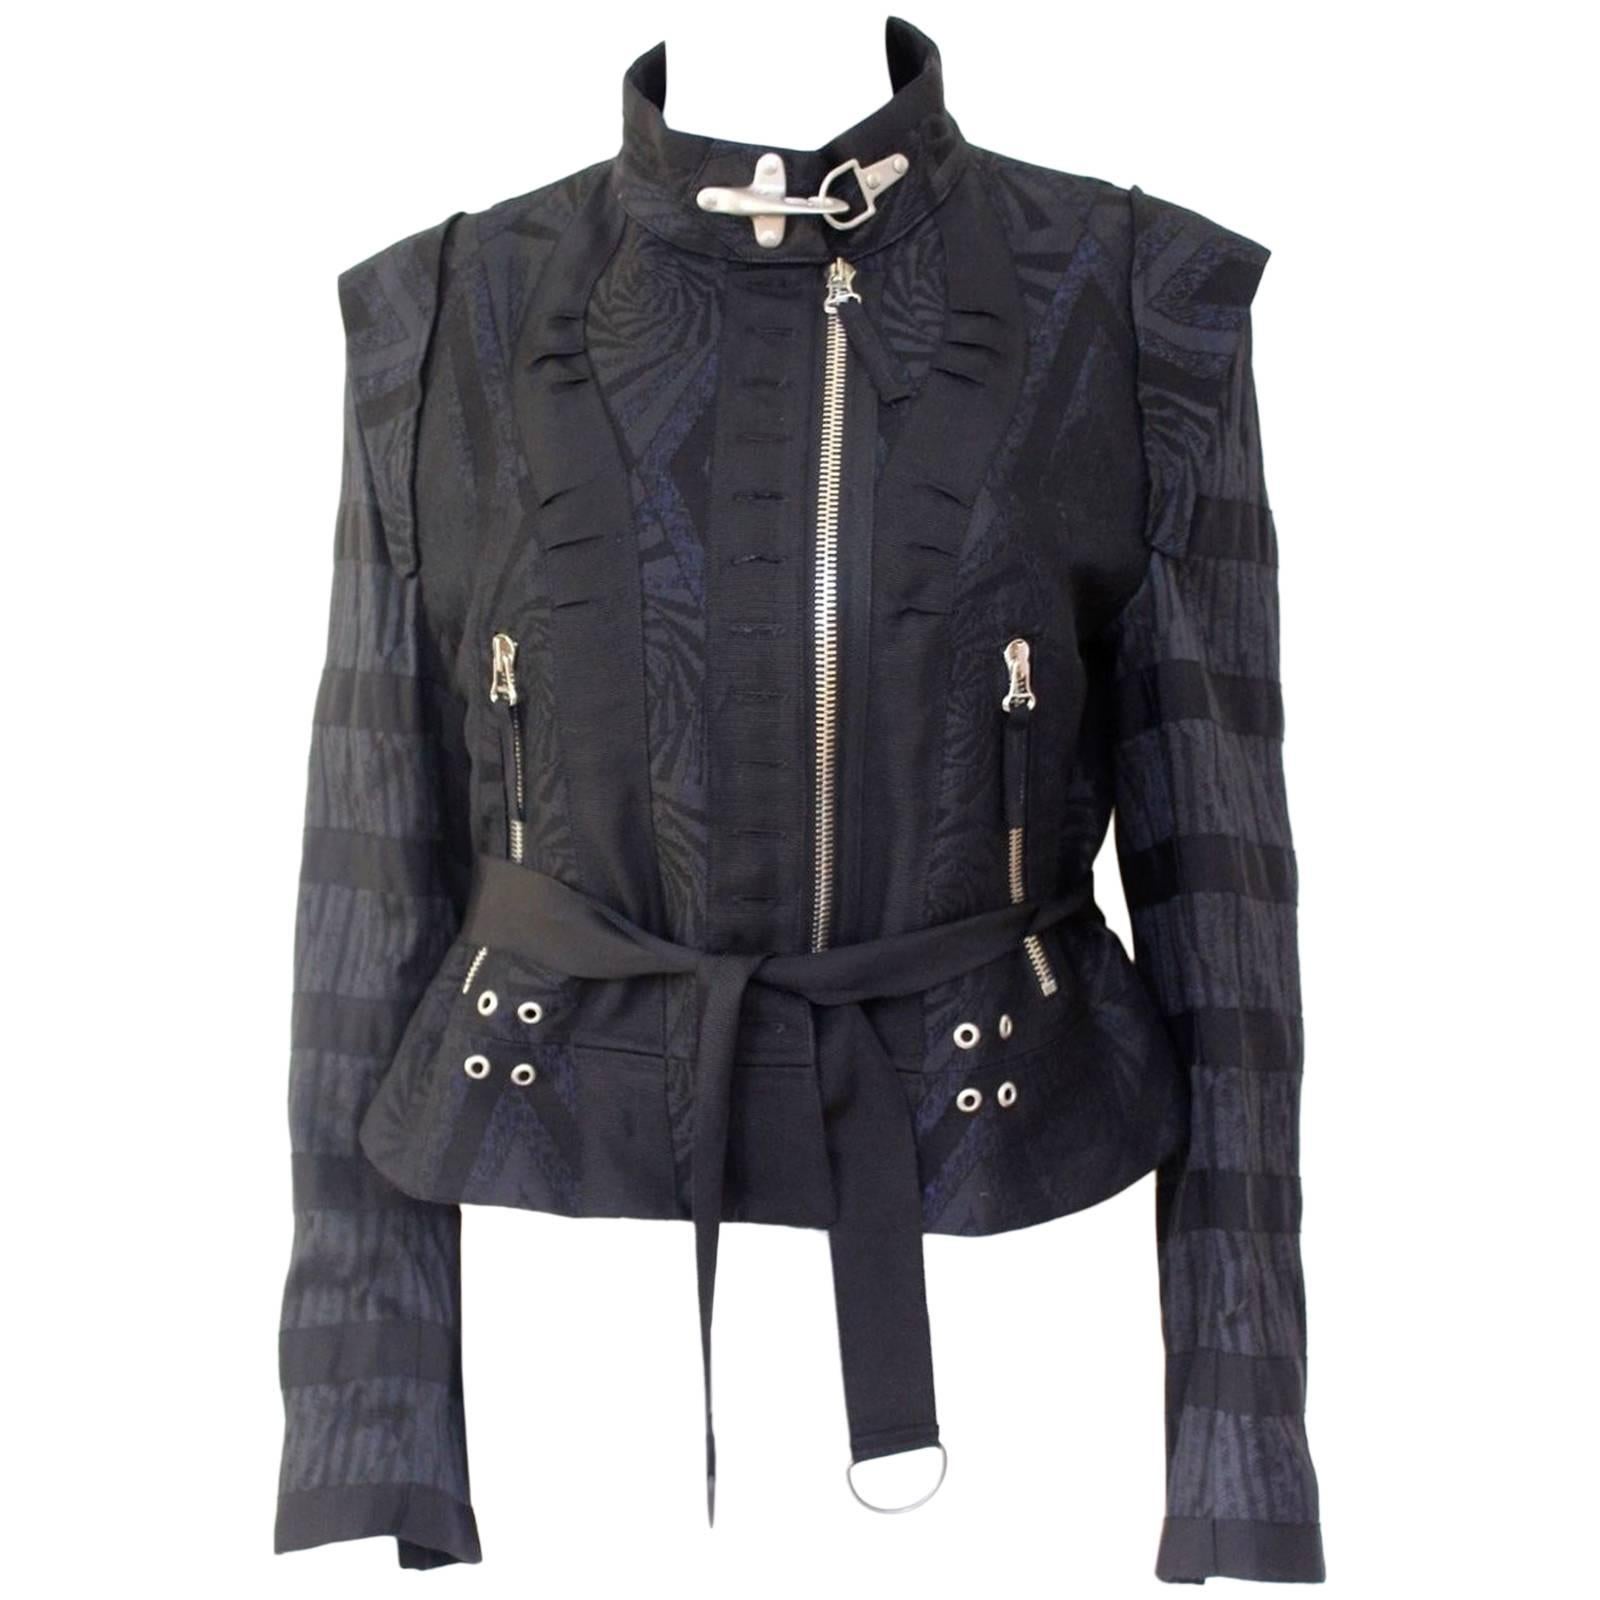 Dries van Noten Black Jacquard Pre Fall 2014 Clasp Jacket 42 uk 14 For Sale